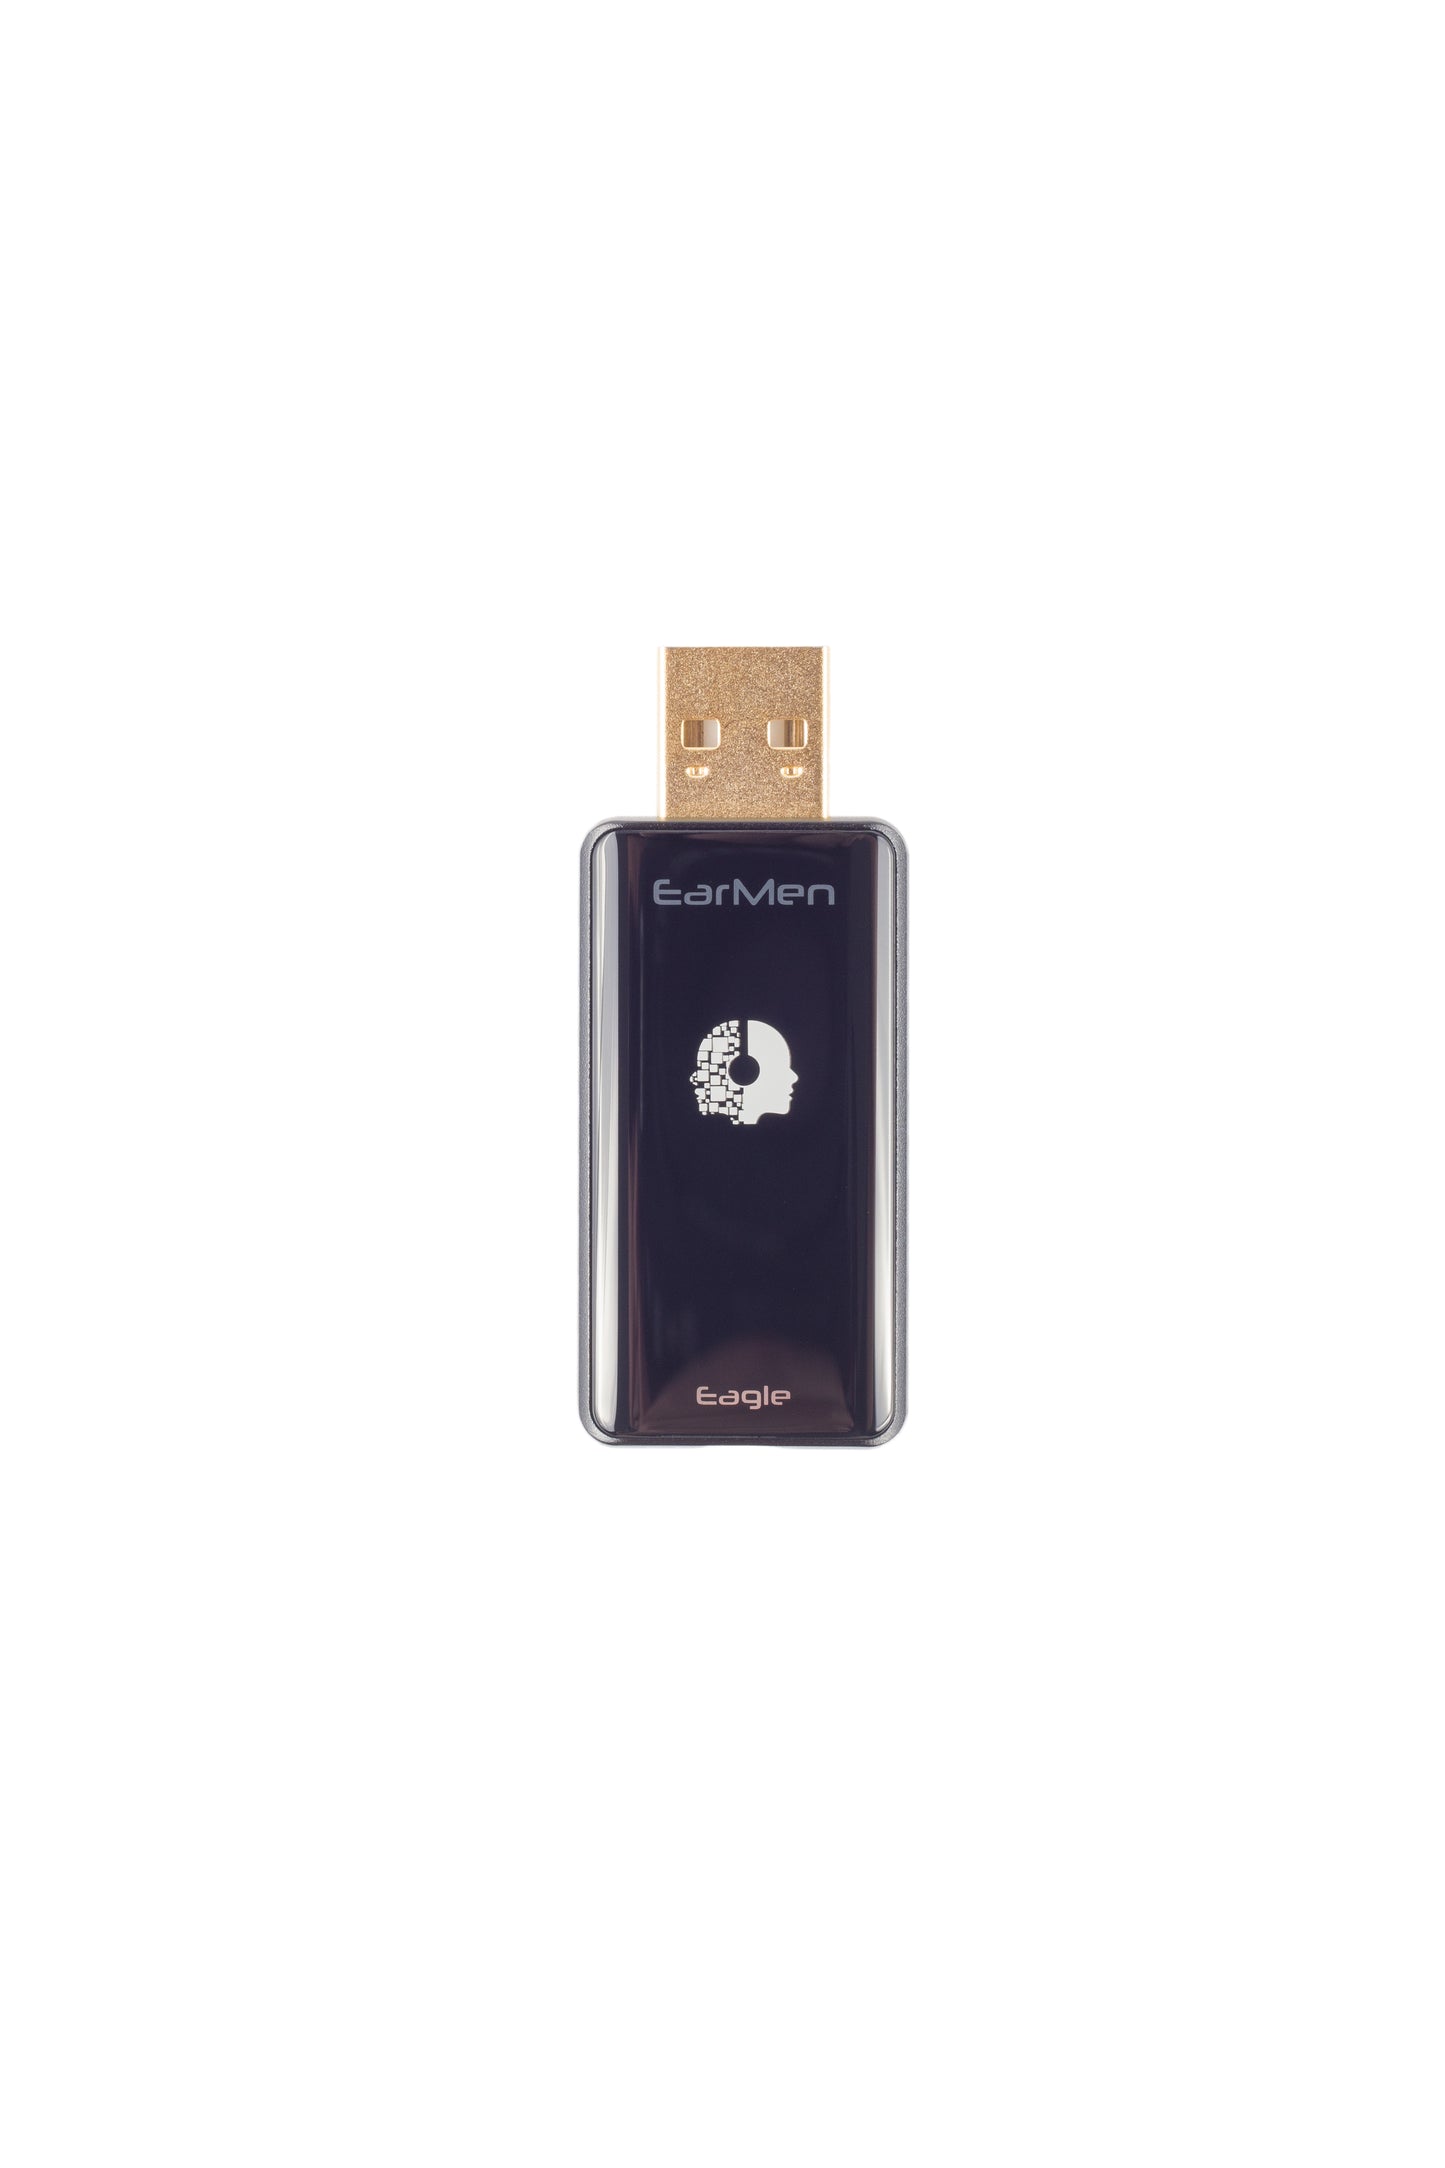 EarMen Eagle USB DAC + Headphone Amp